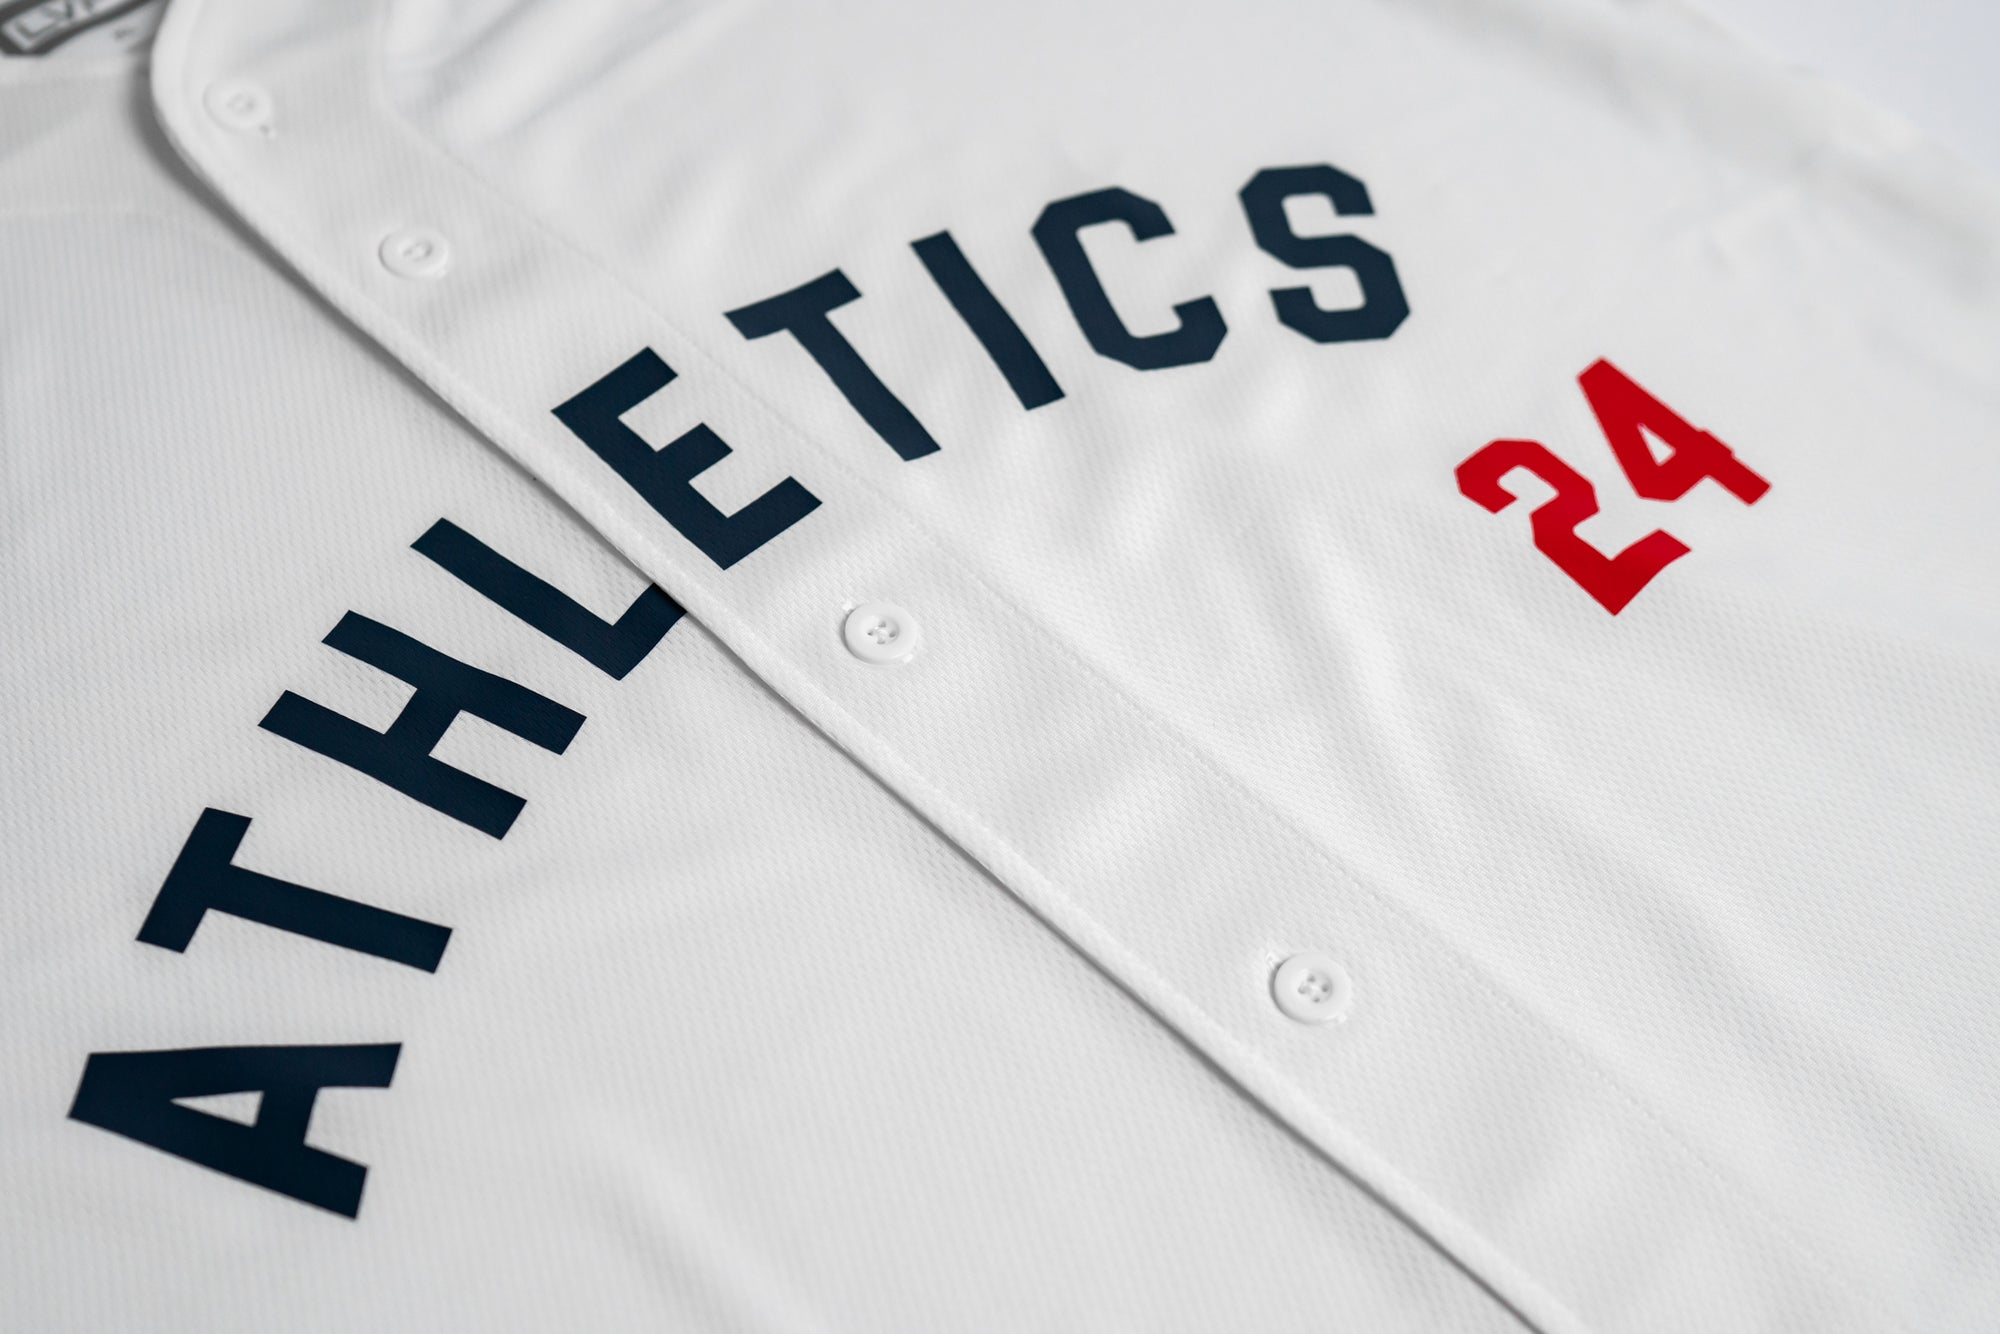 Athletics Baseball Jersey - White - Live Fit. Apparel